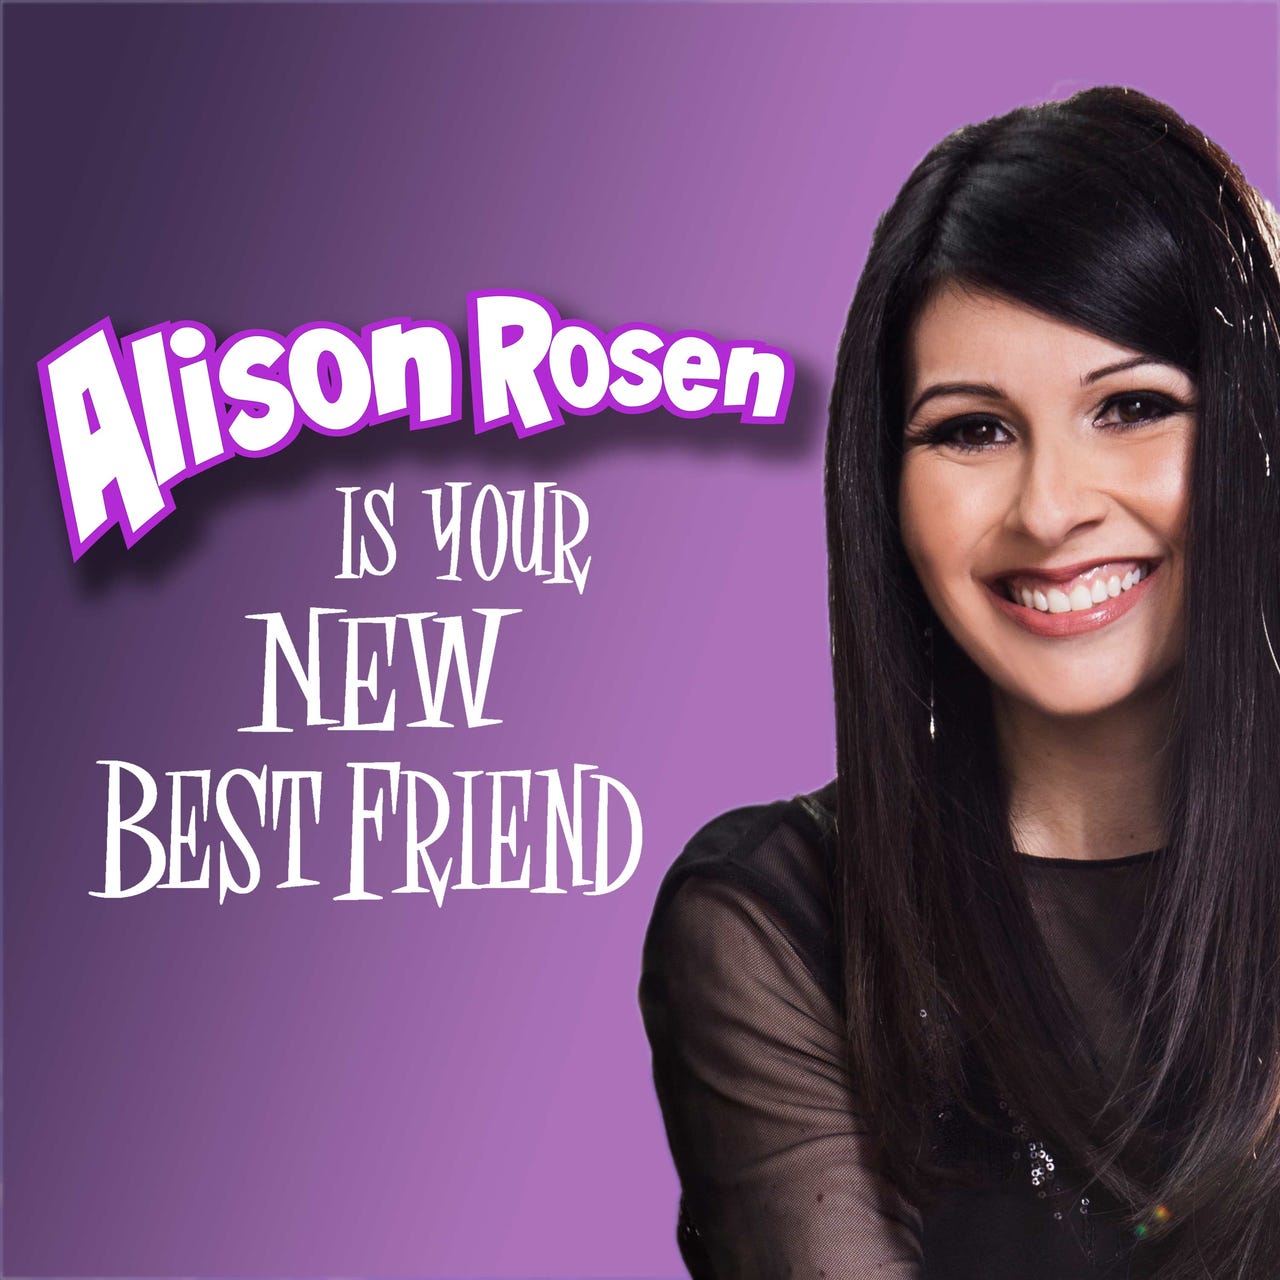 Alison Rosen Is Your New Best Friend!